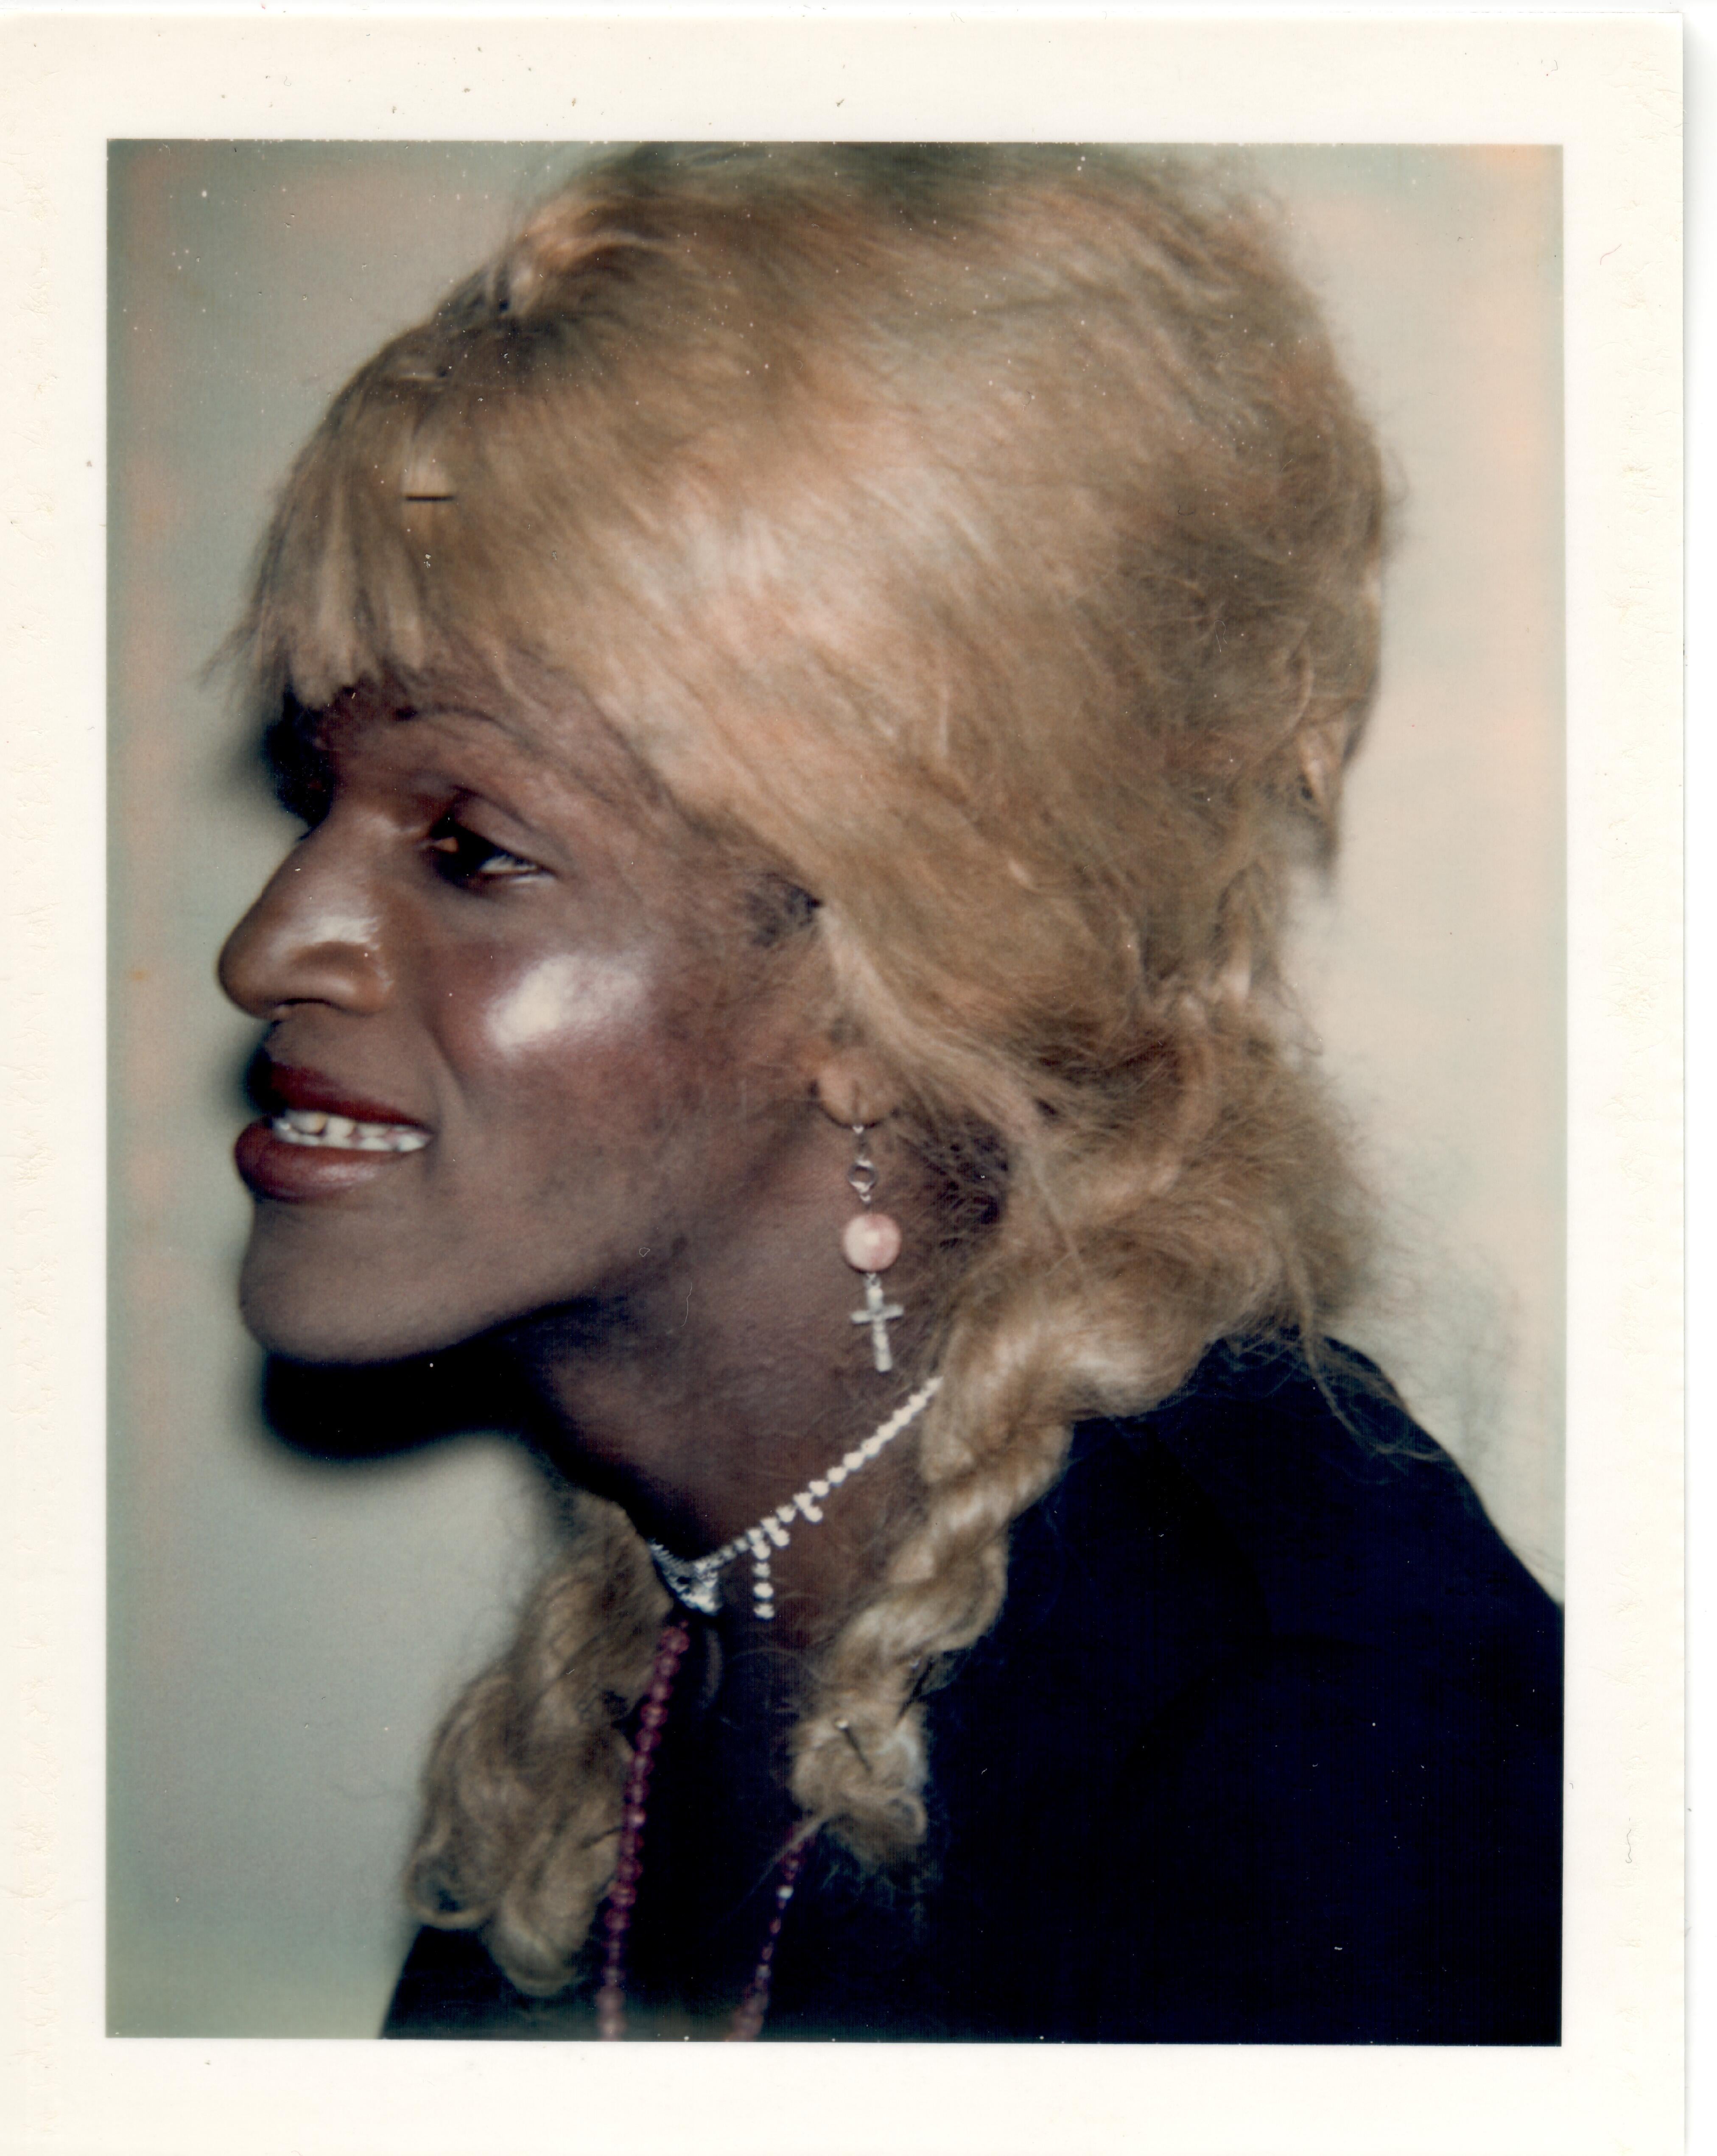 Andy Warhol Color Photograph - Ladies and Gentlemen (Marsha P. Johnson)